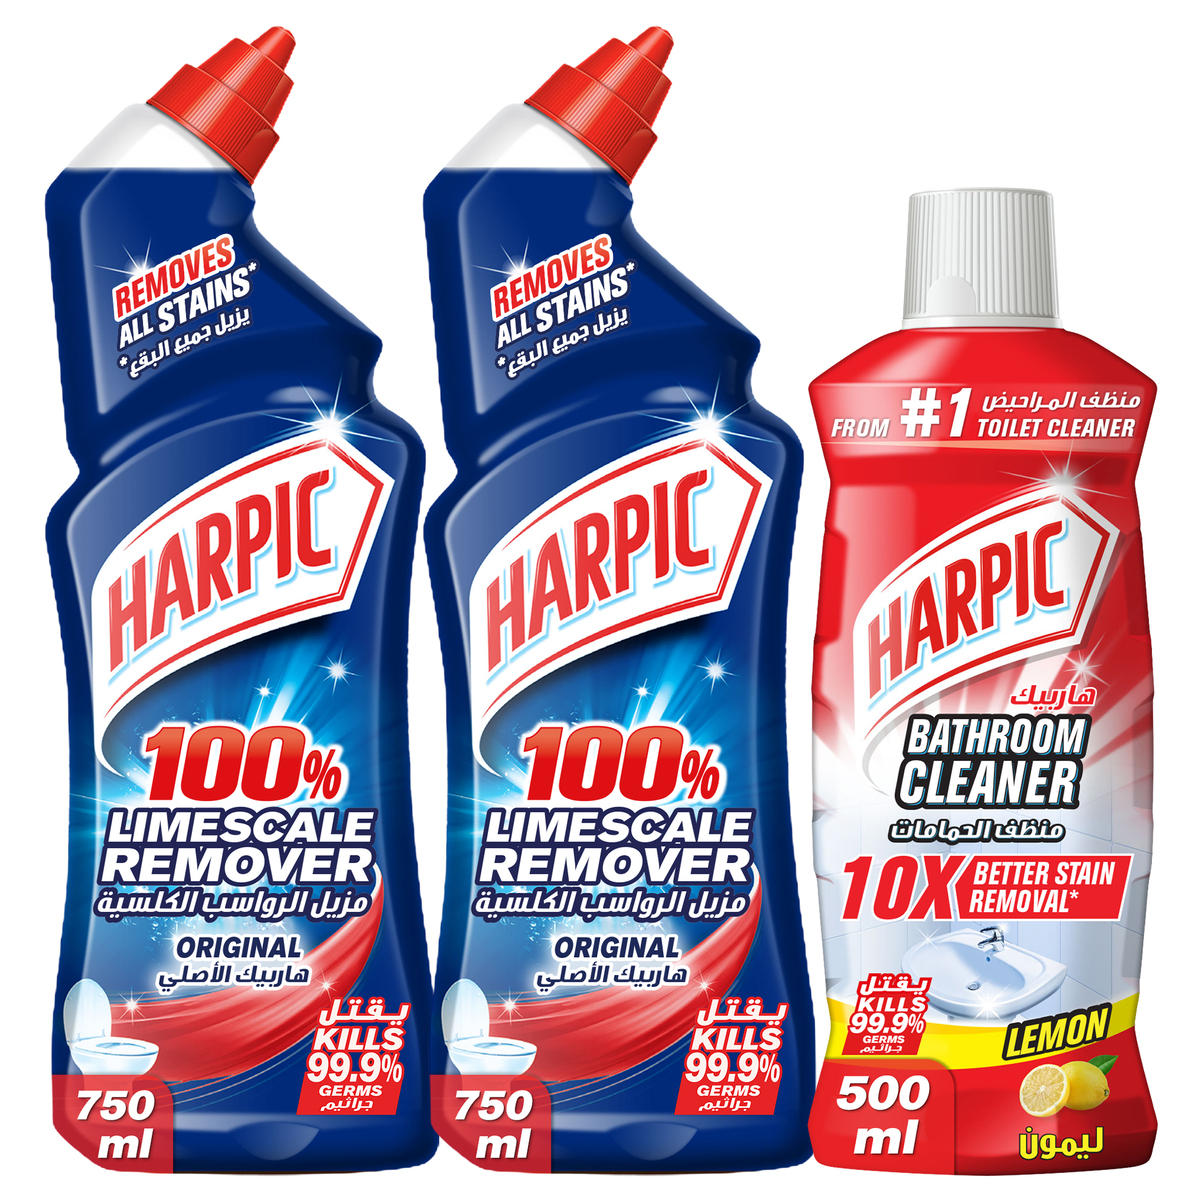 10x Harpic Toilet & Bathroom Sanitizer Spray - Kills 99.9